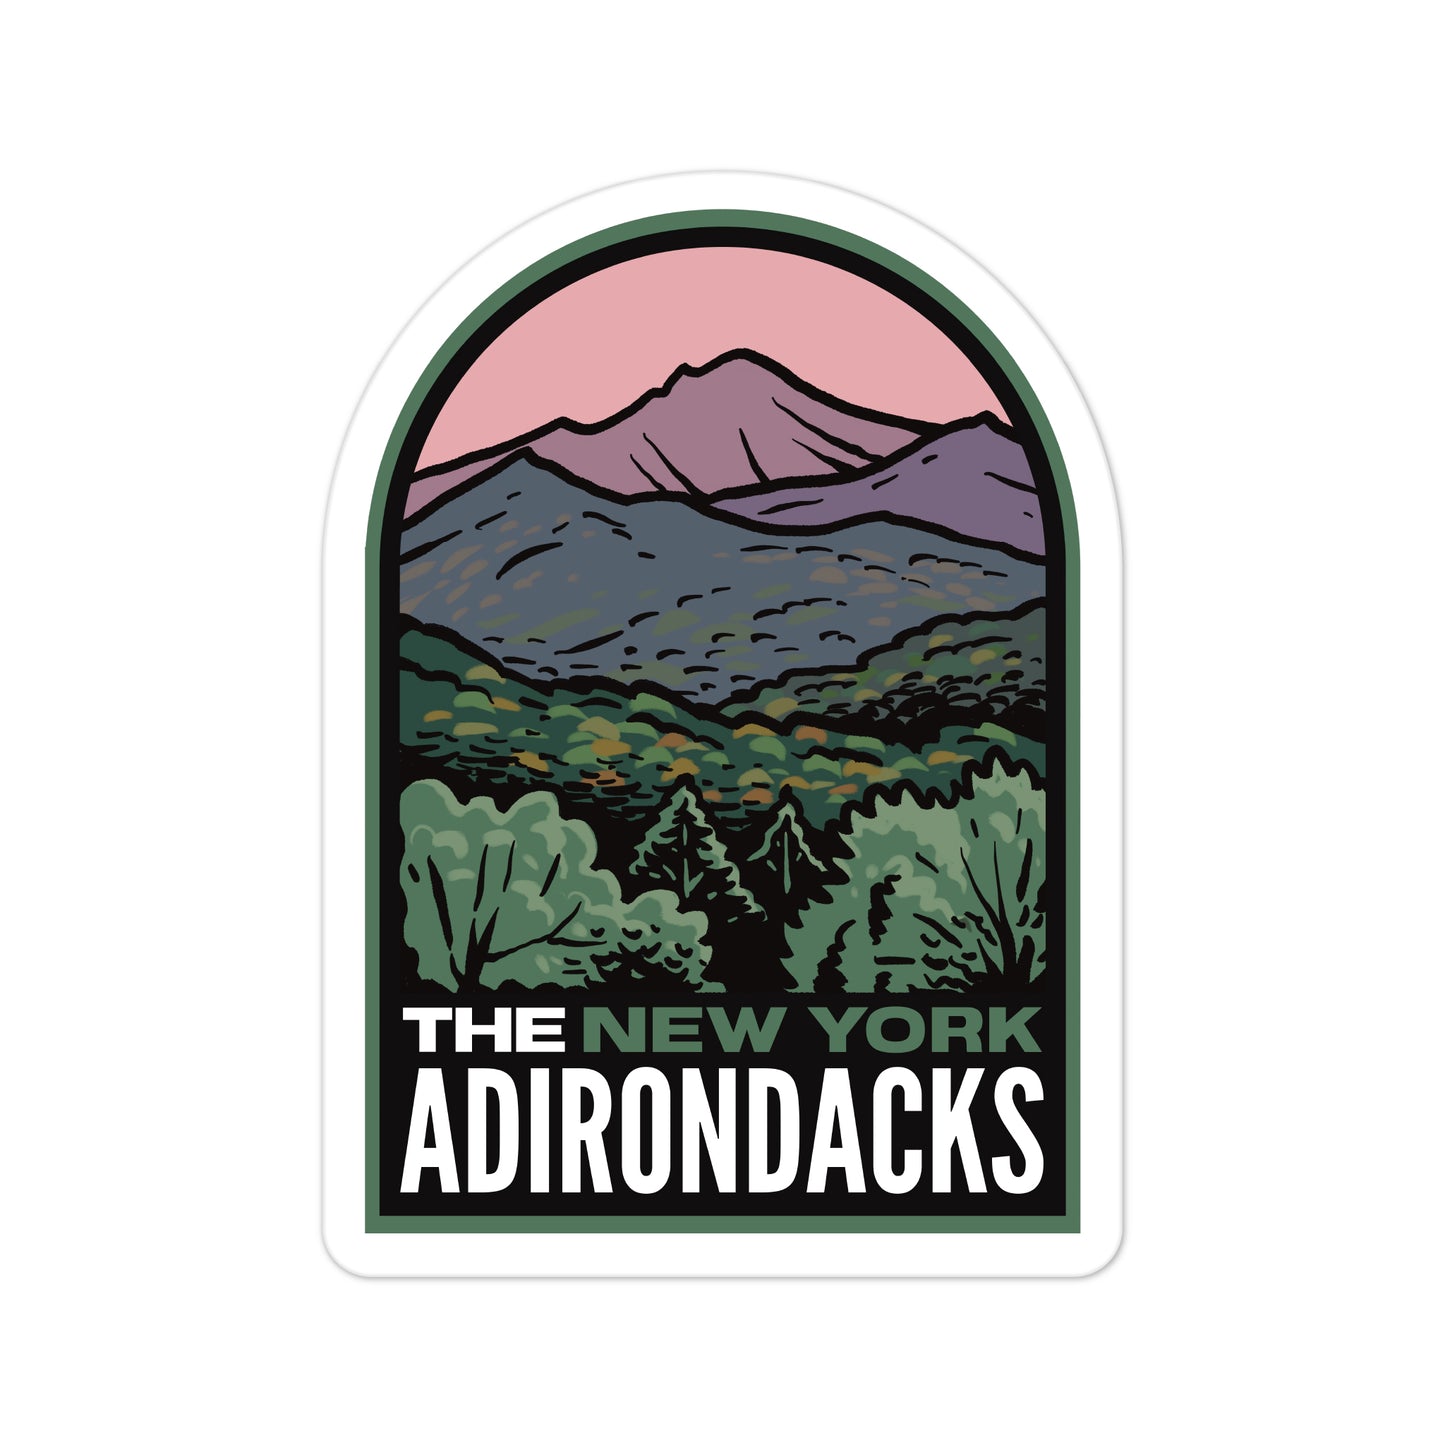 A sticker of The Adirondacks